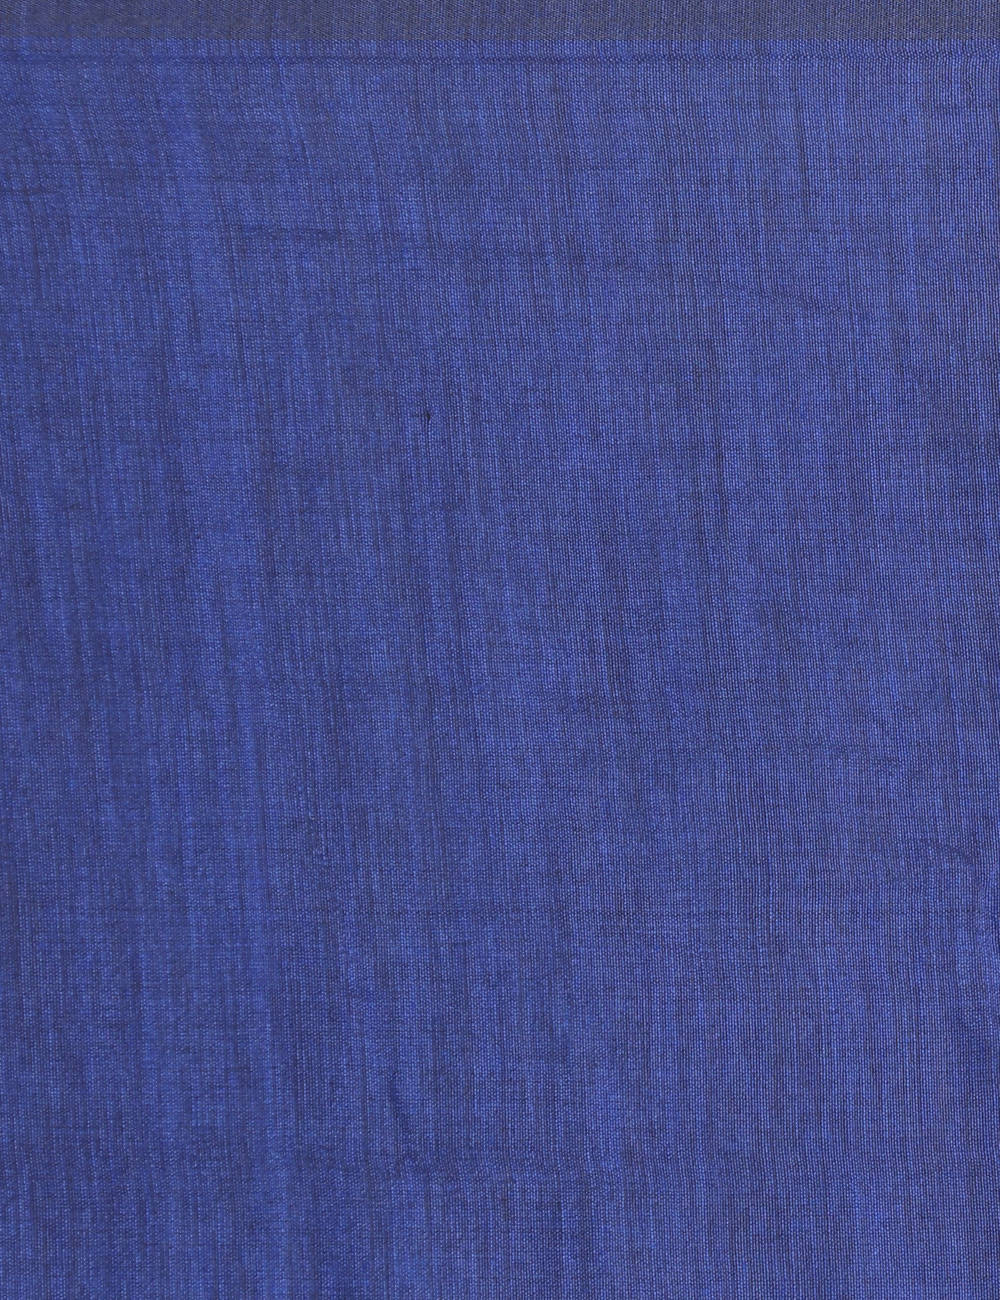 Blue handspun handwoven cotton saree